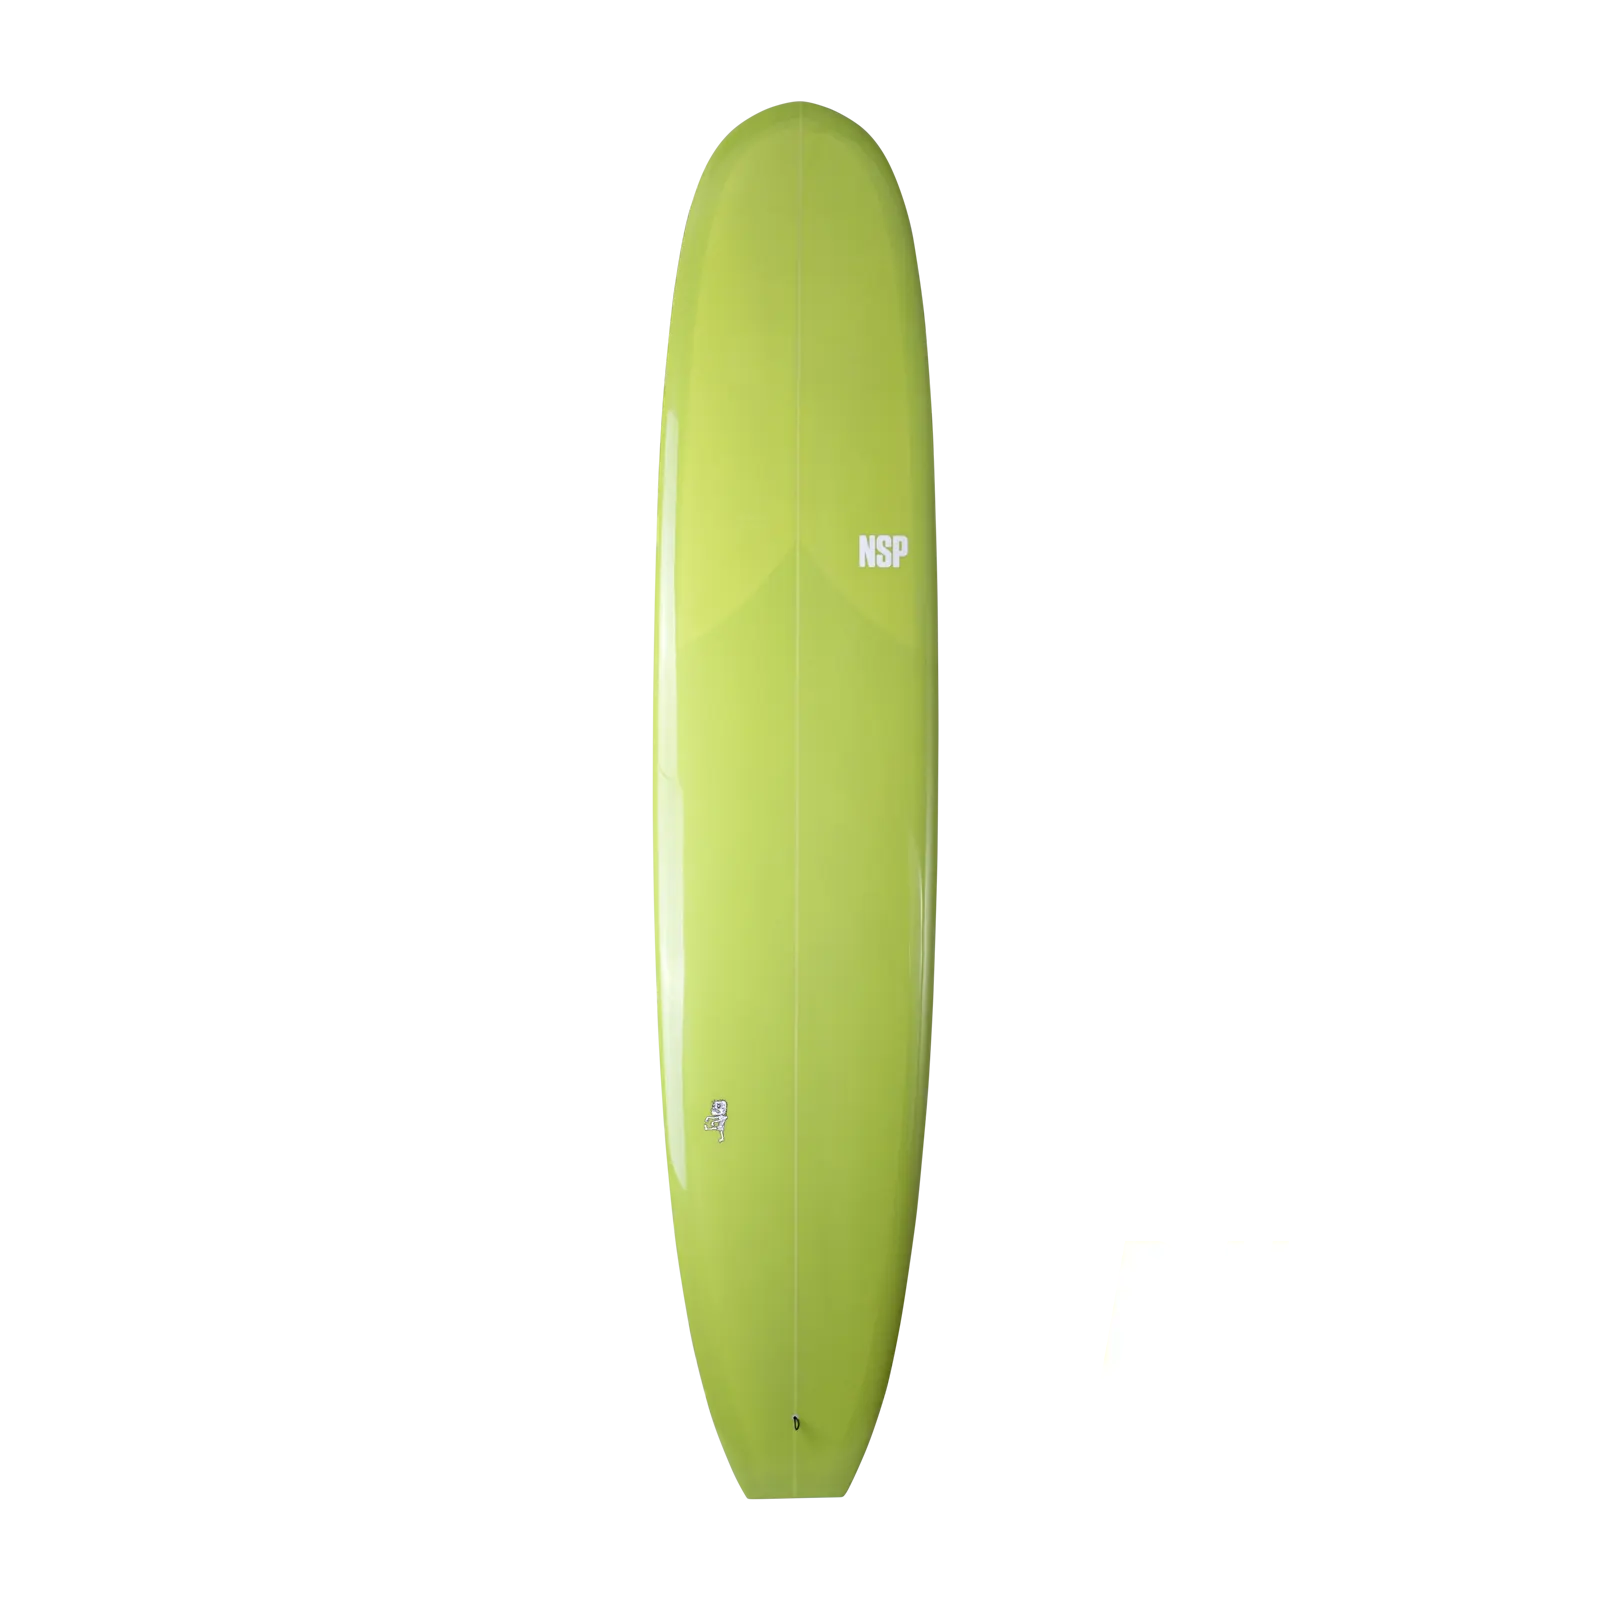 Sleep Walker Surfboards NSP PU Green